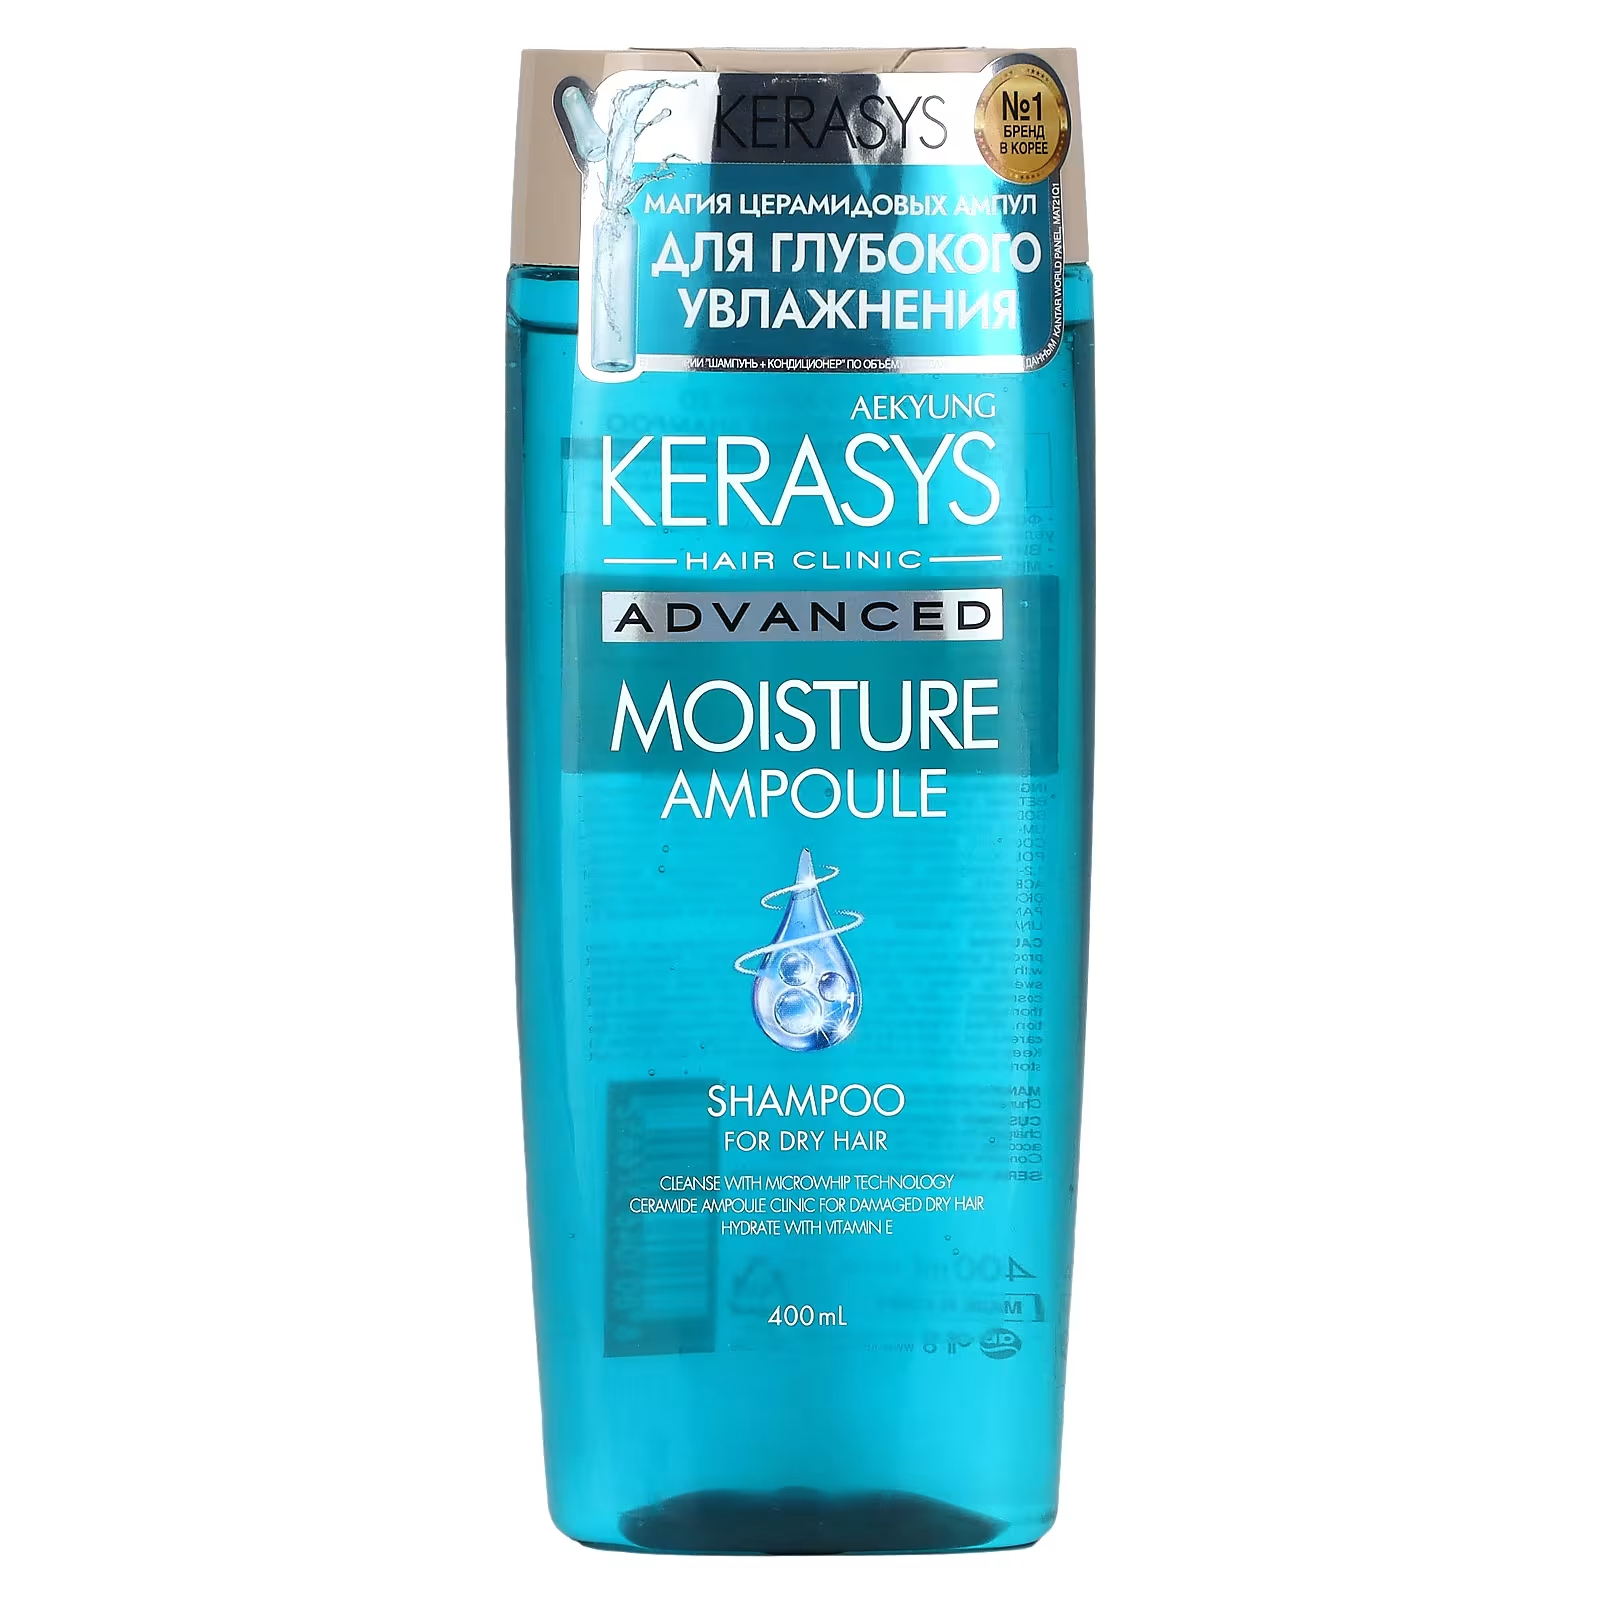 Шампунь Kerasys Advanced Moisture Ampoule для сухих волос, 400 мл kerasys advanced moisture ampoule shampoo